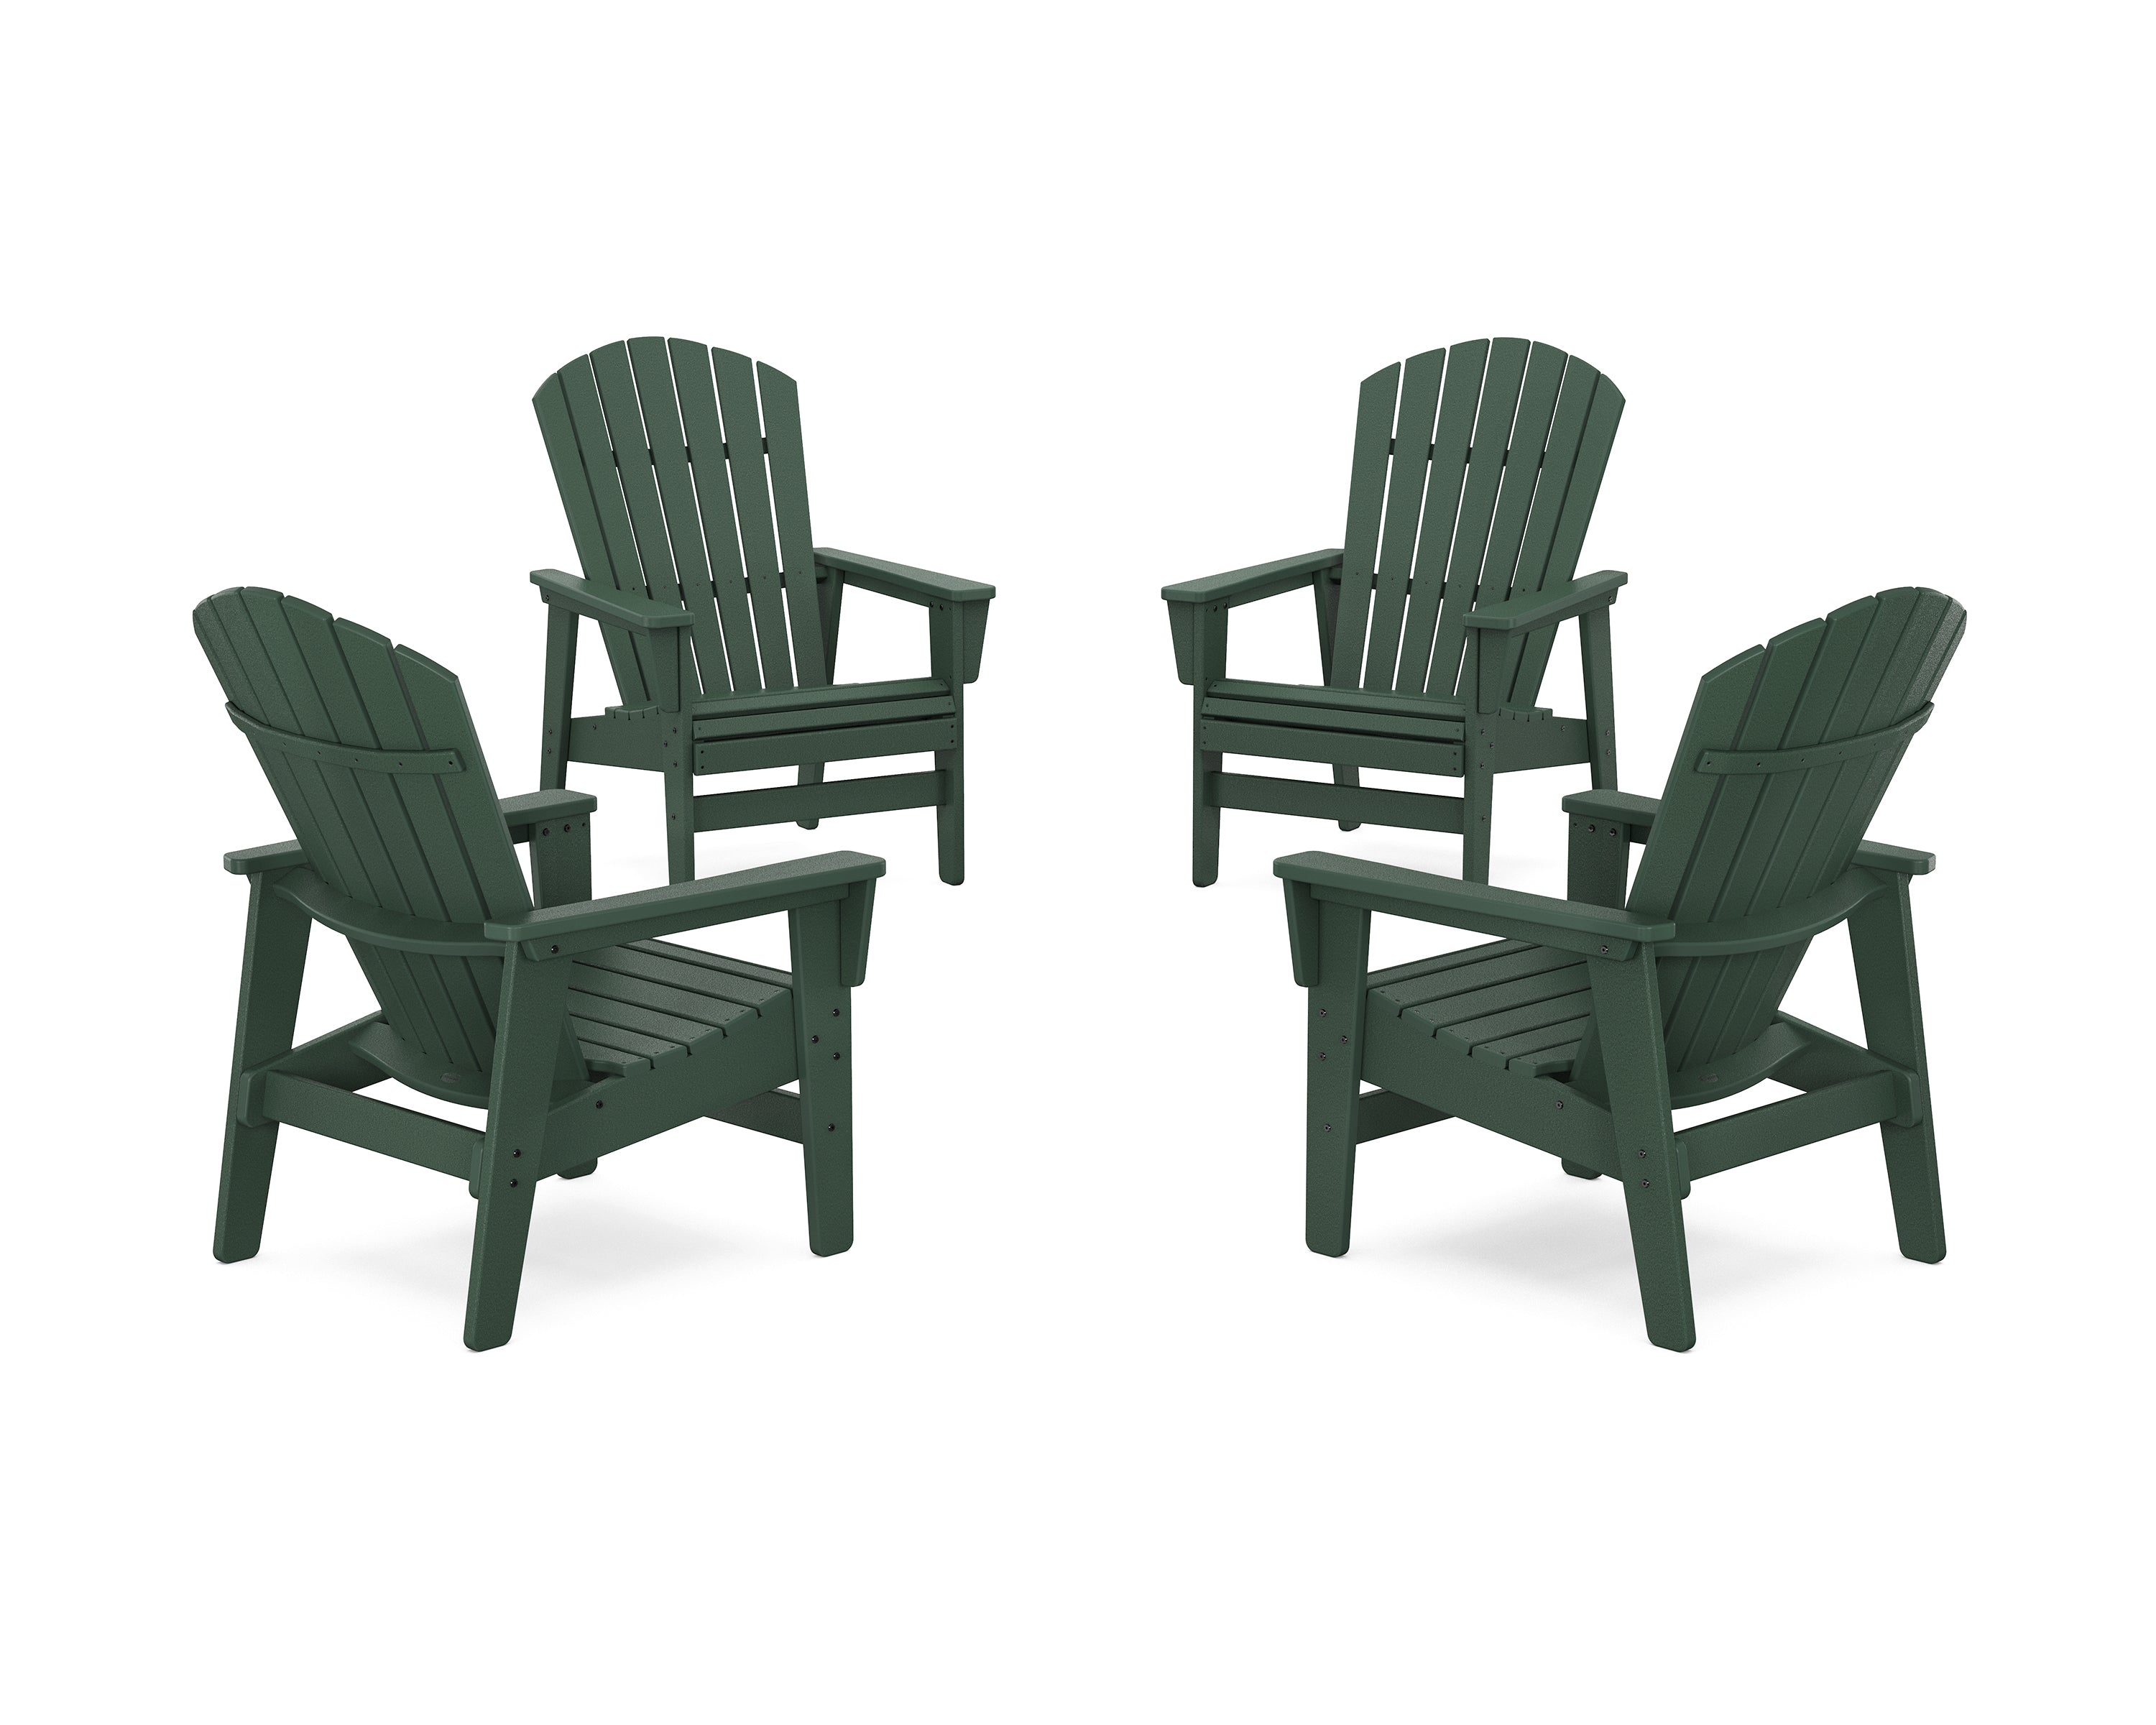 POLYWOOD® 4-Piece Nautical Grand Upright Adirondack Chair Conversation Set in Green